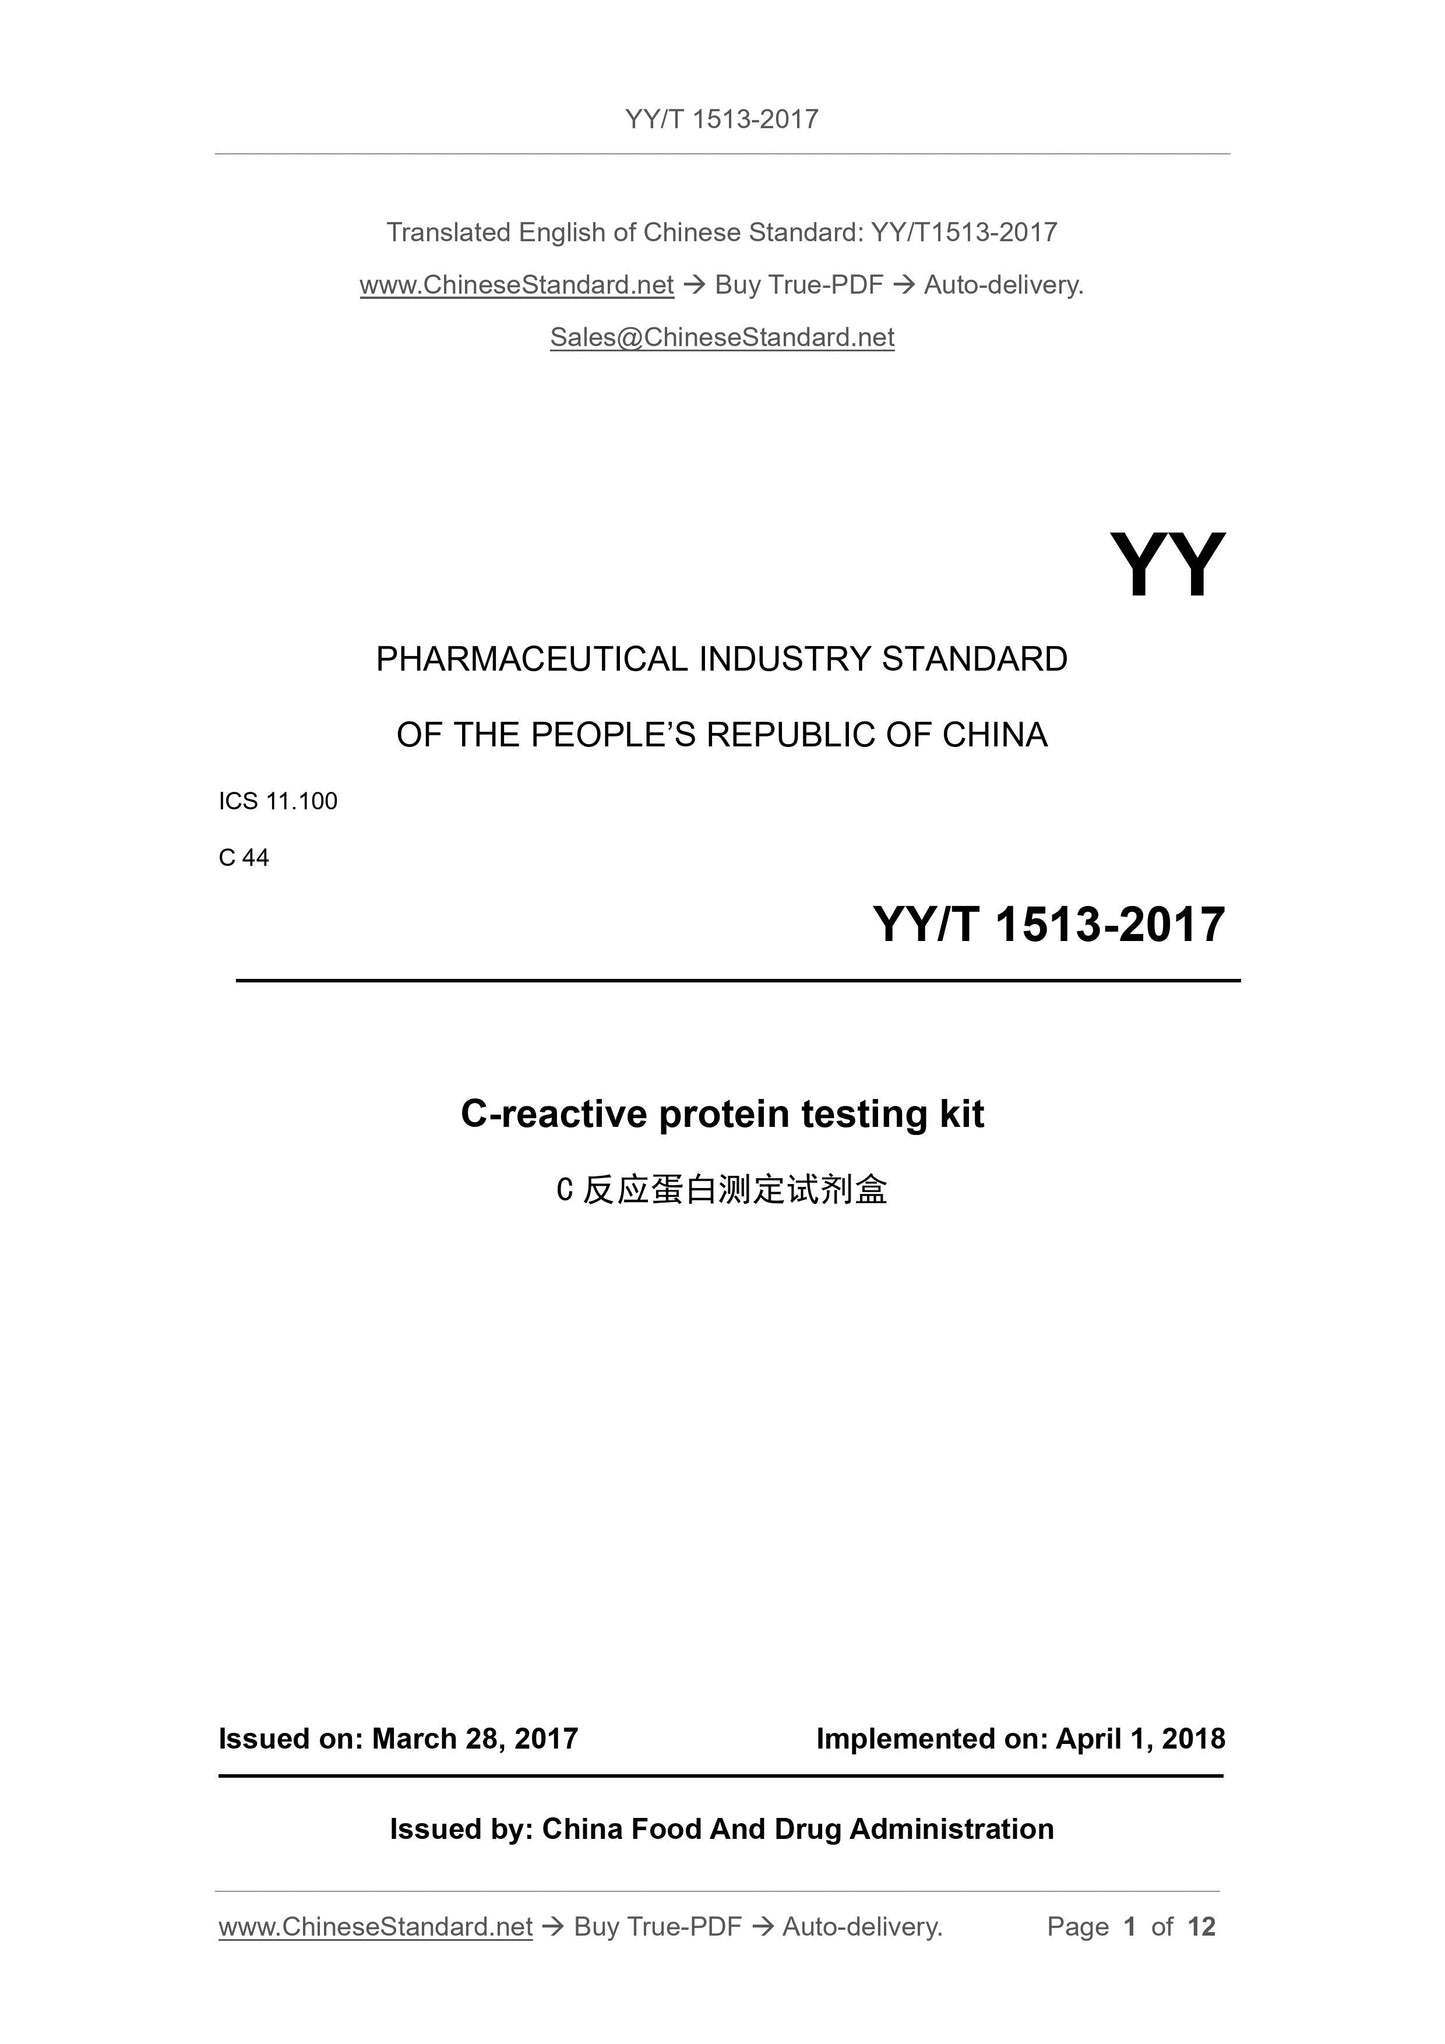 YY/T 1513-2017 Page 1